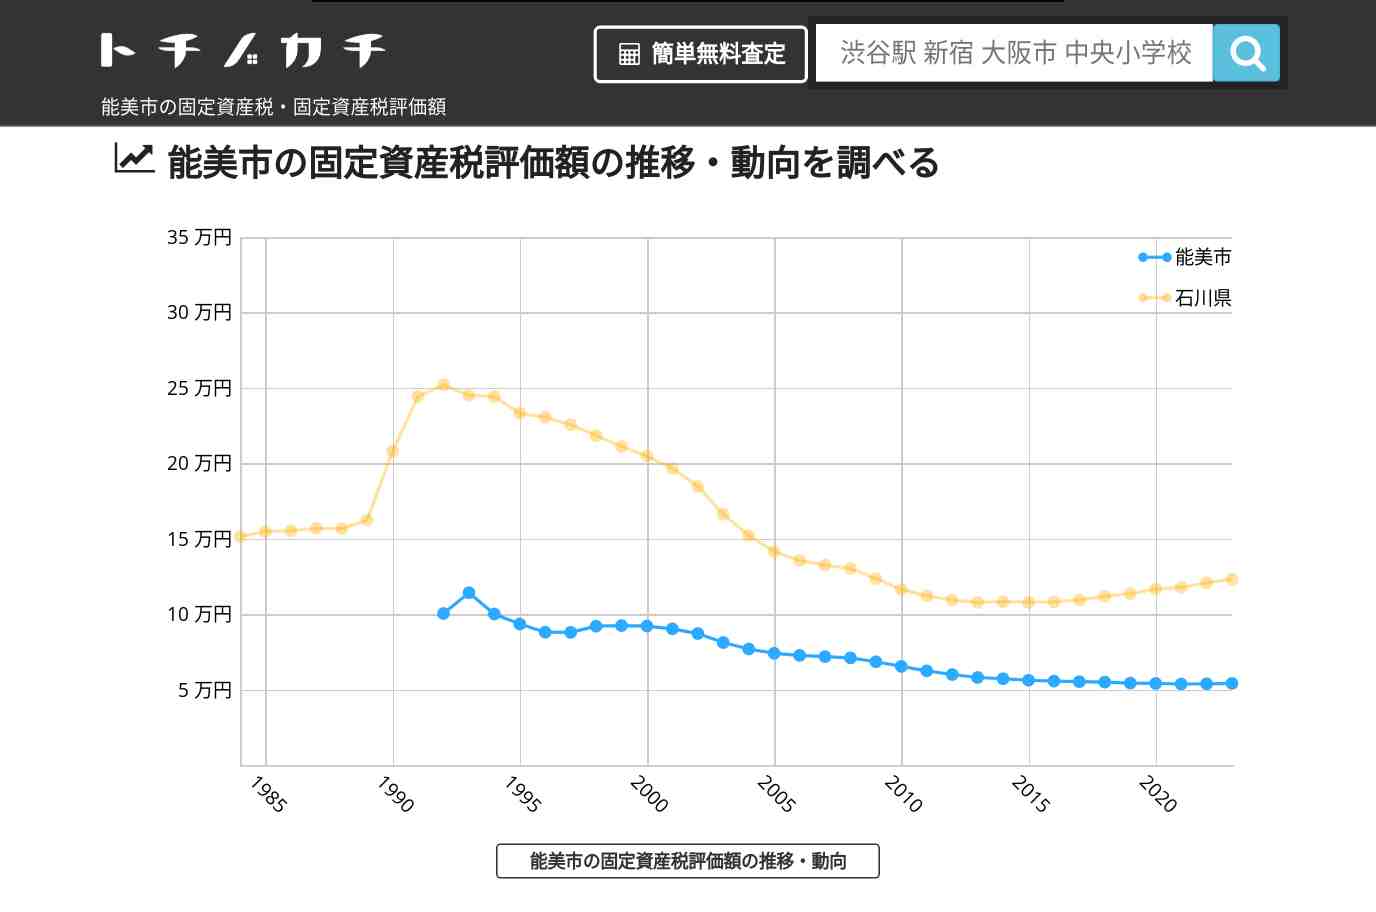 和気小学校(石川県 能美市)周辺の固定資産税・固定資産税評価額 | トチノカチ